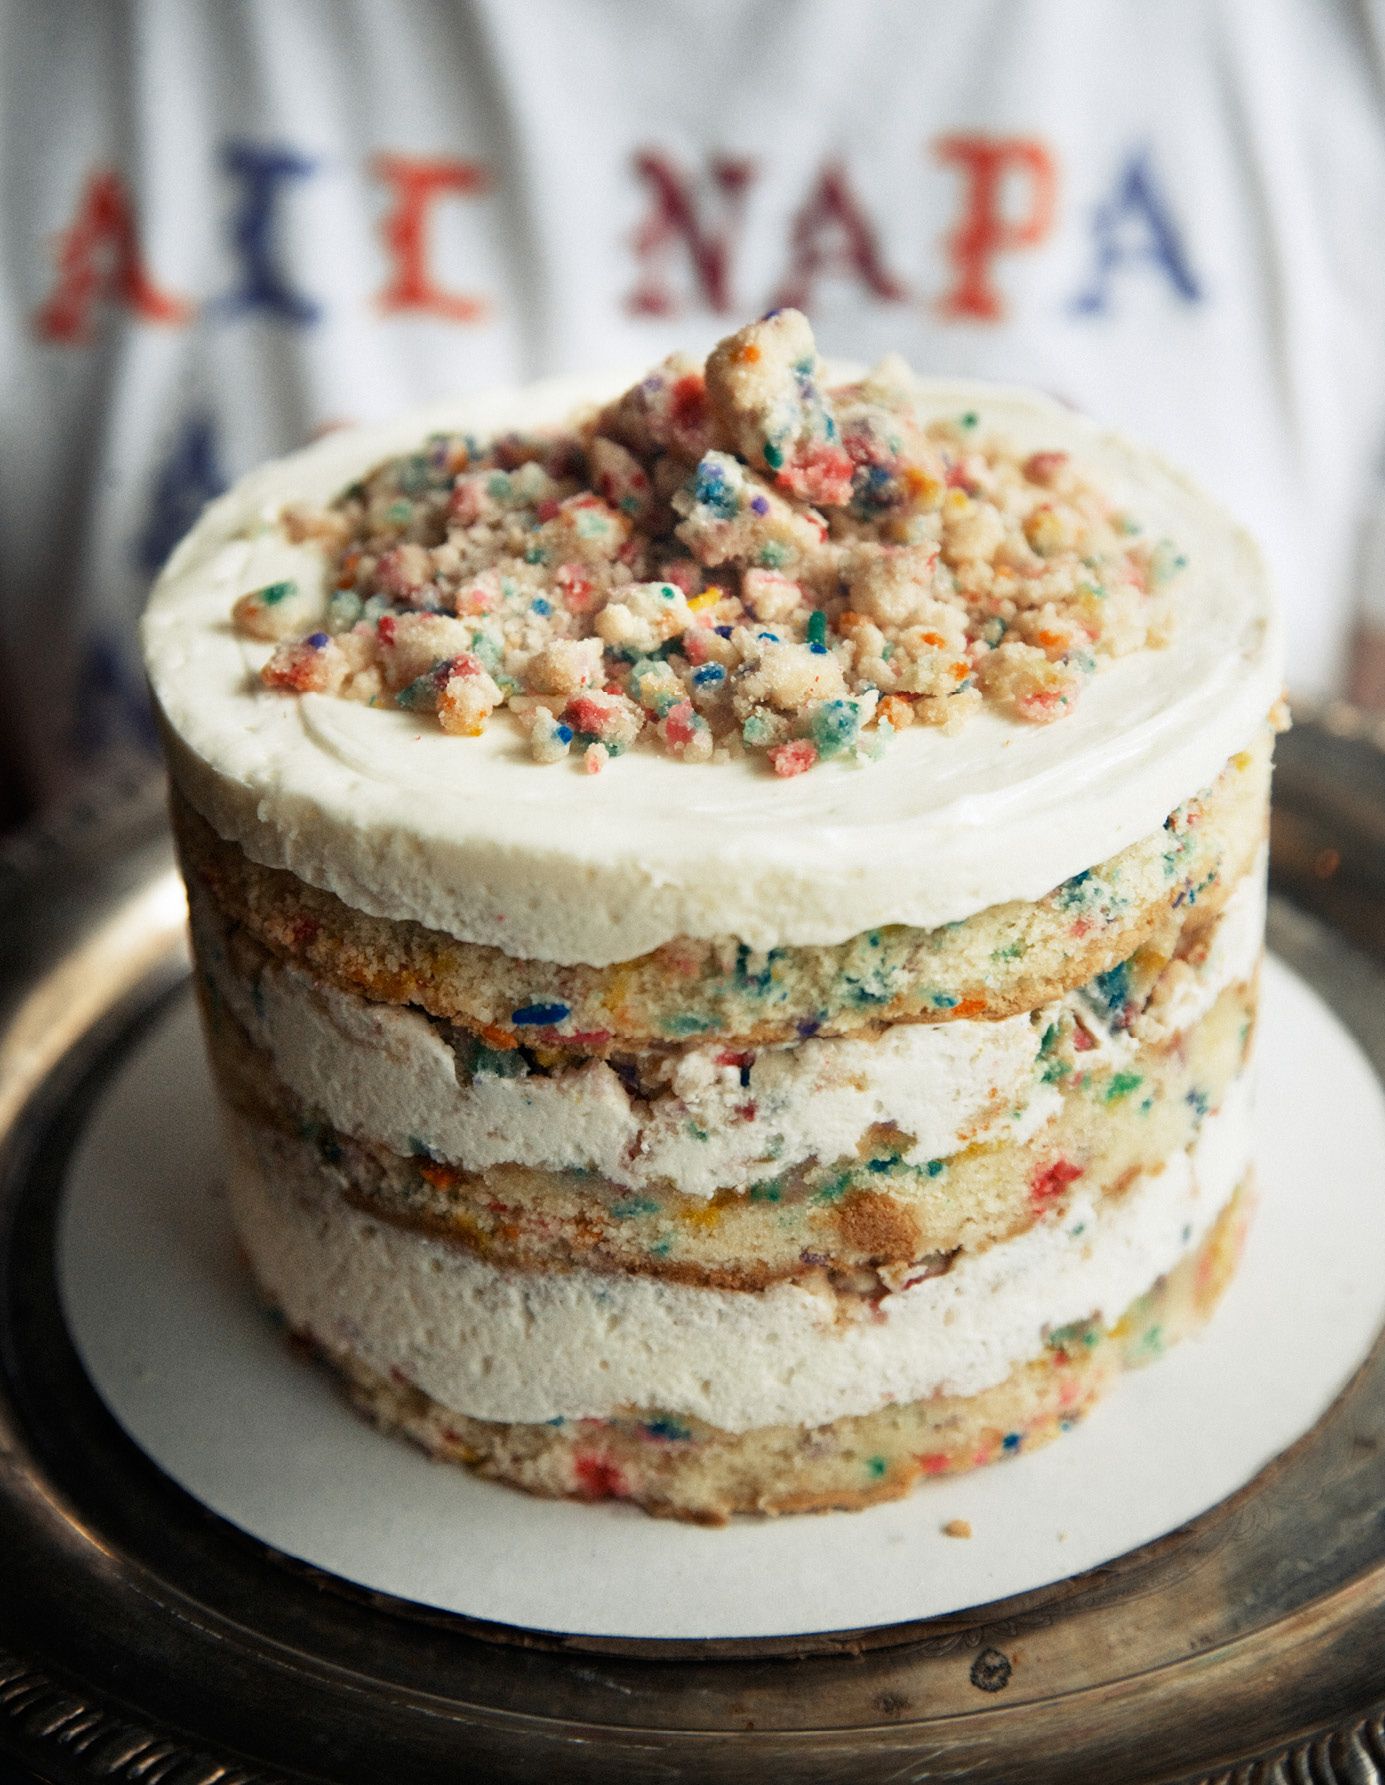 New York Teacup & Saucer - Cake Affair, cakes for every occasion